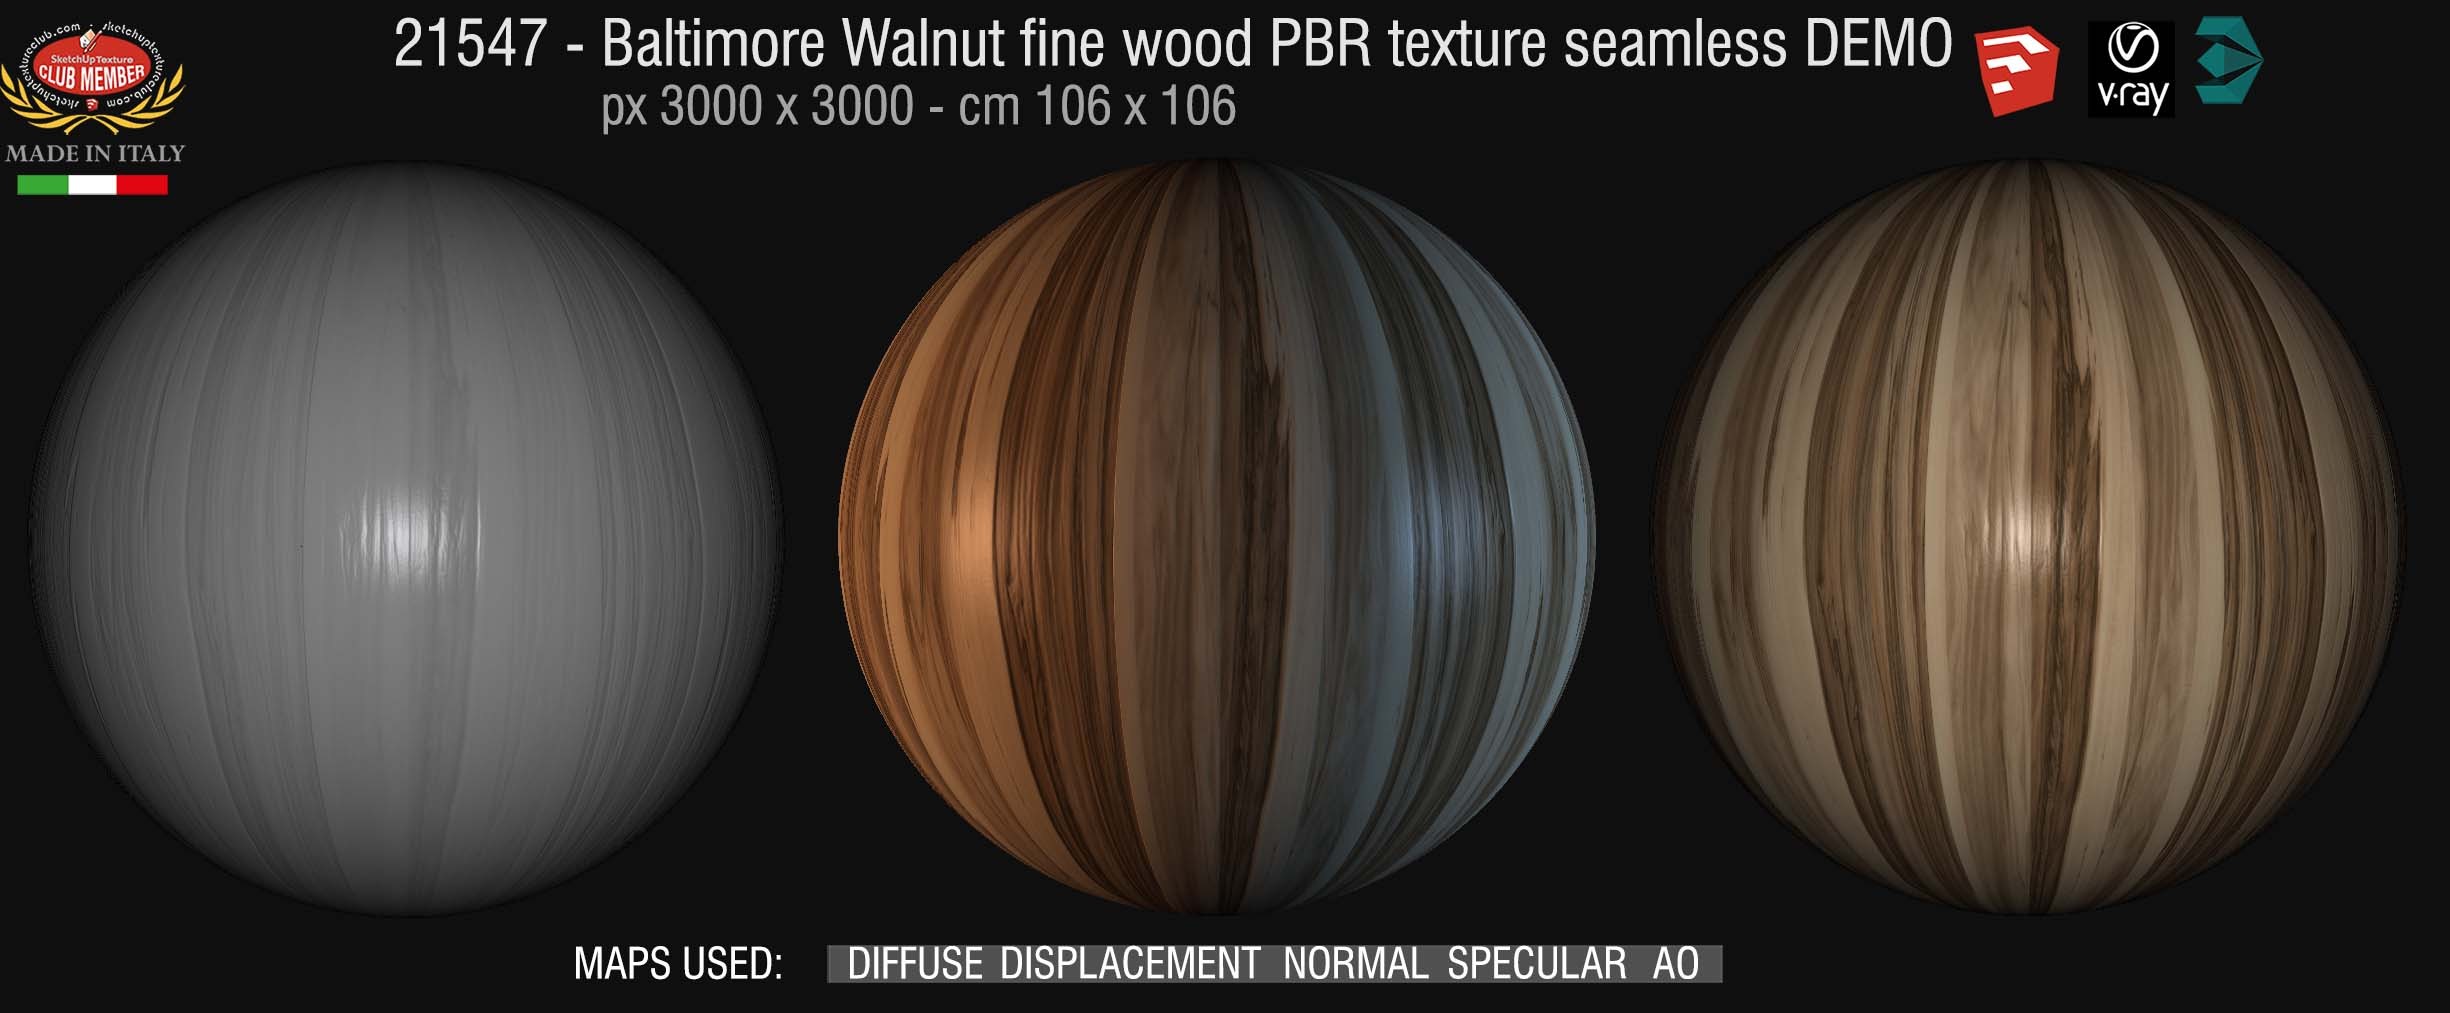 21547 Baltimore Walnut fine wood PBR texture seamless DEMO